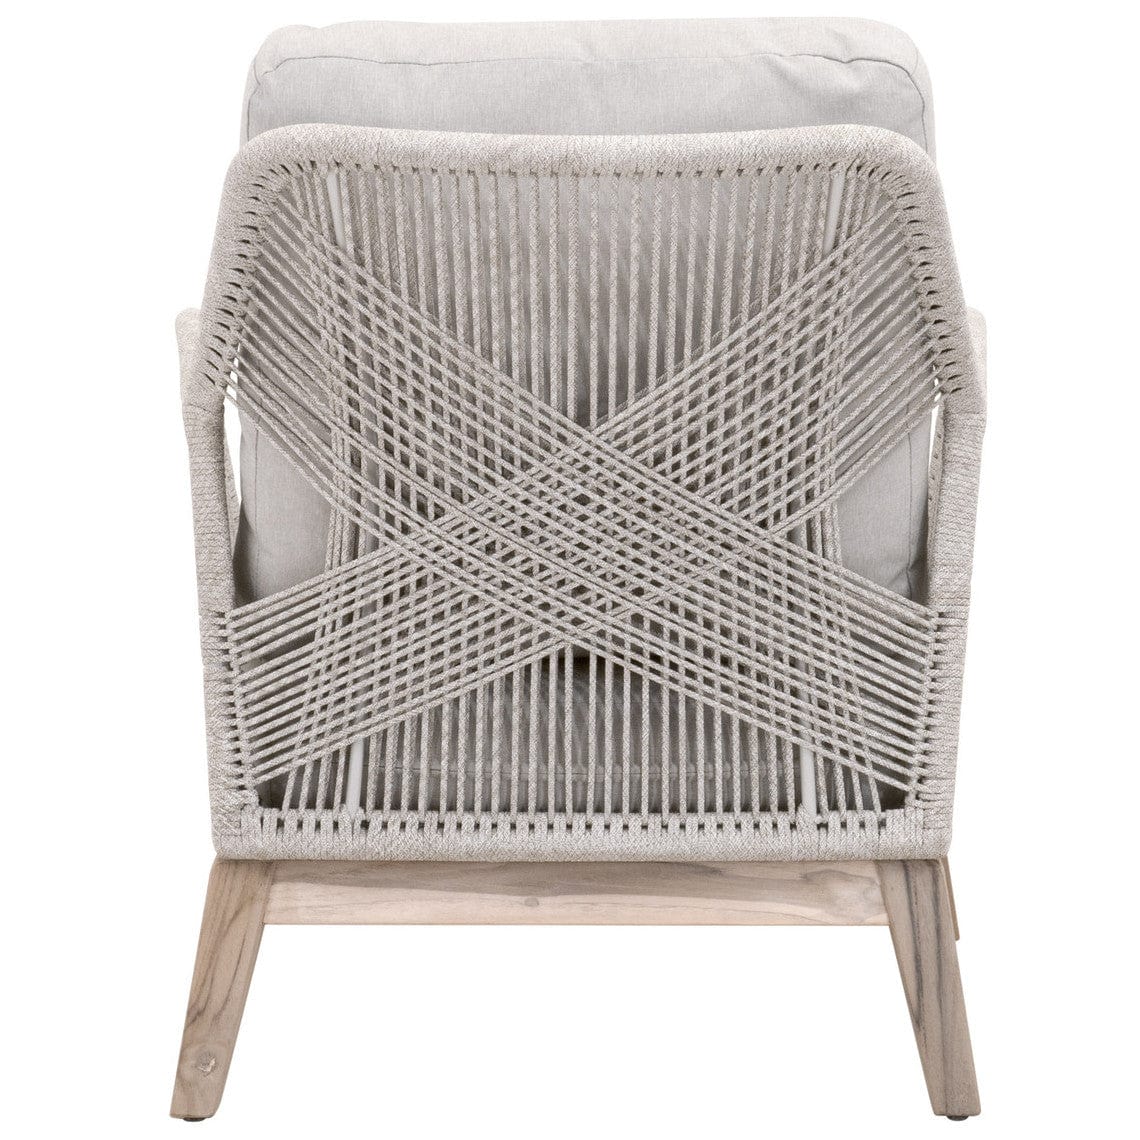 BLU Home Loom Outdoor Club Chair Furniture